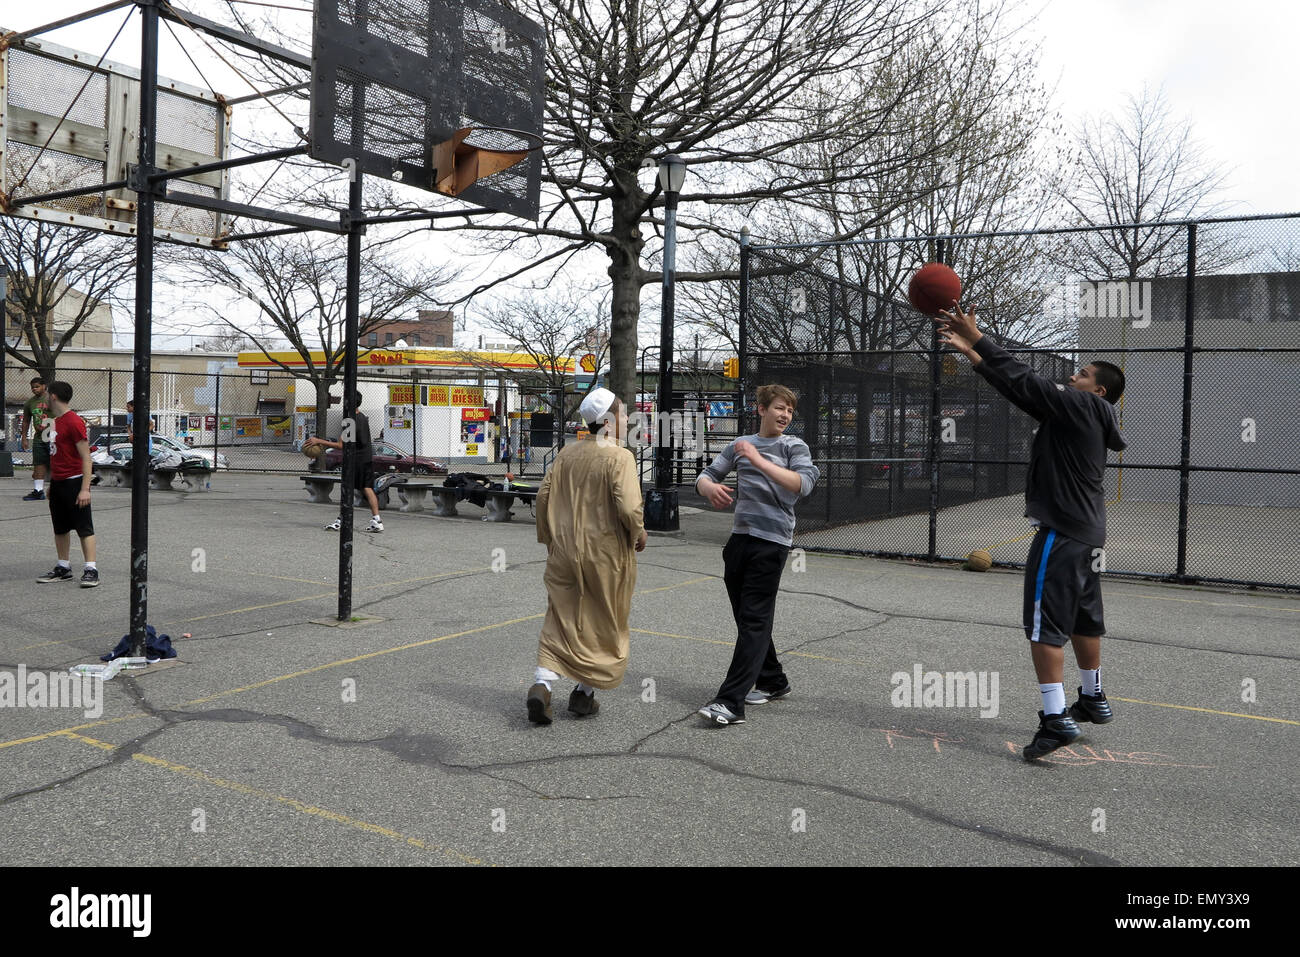 Street Basketball: Court's Peak — play online for free on Yandex Games